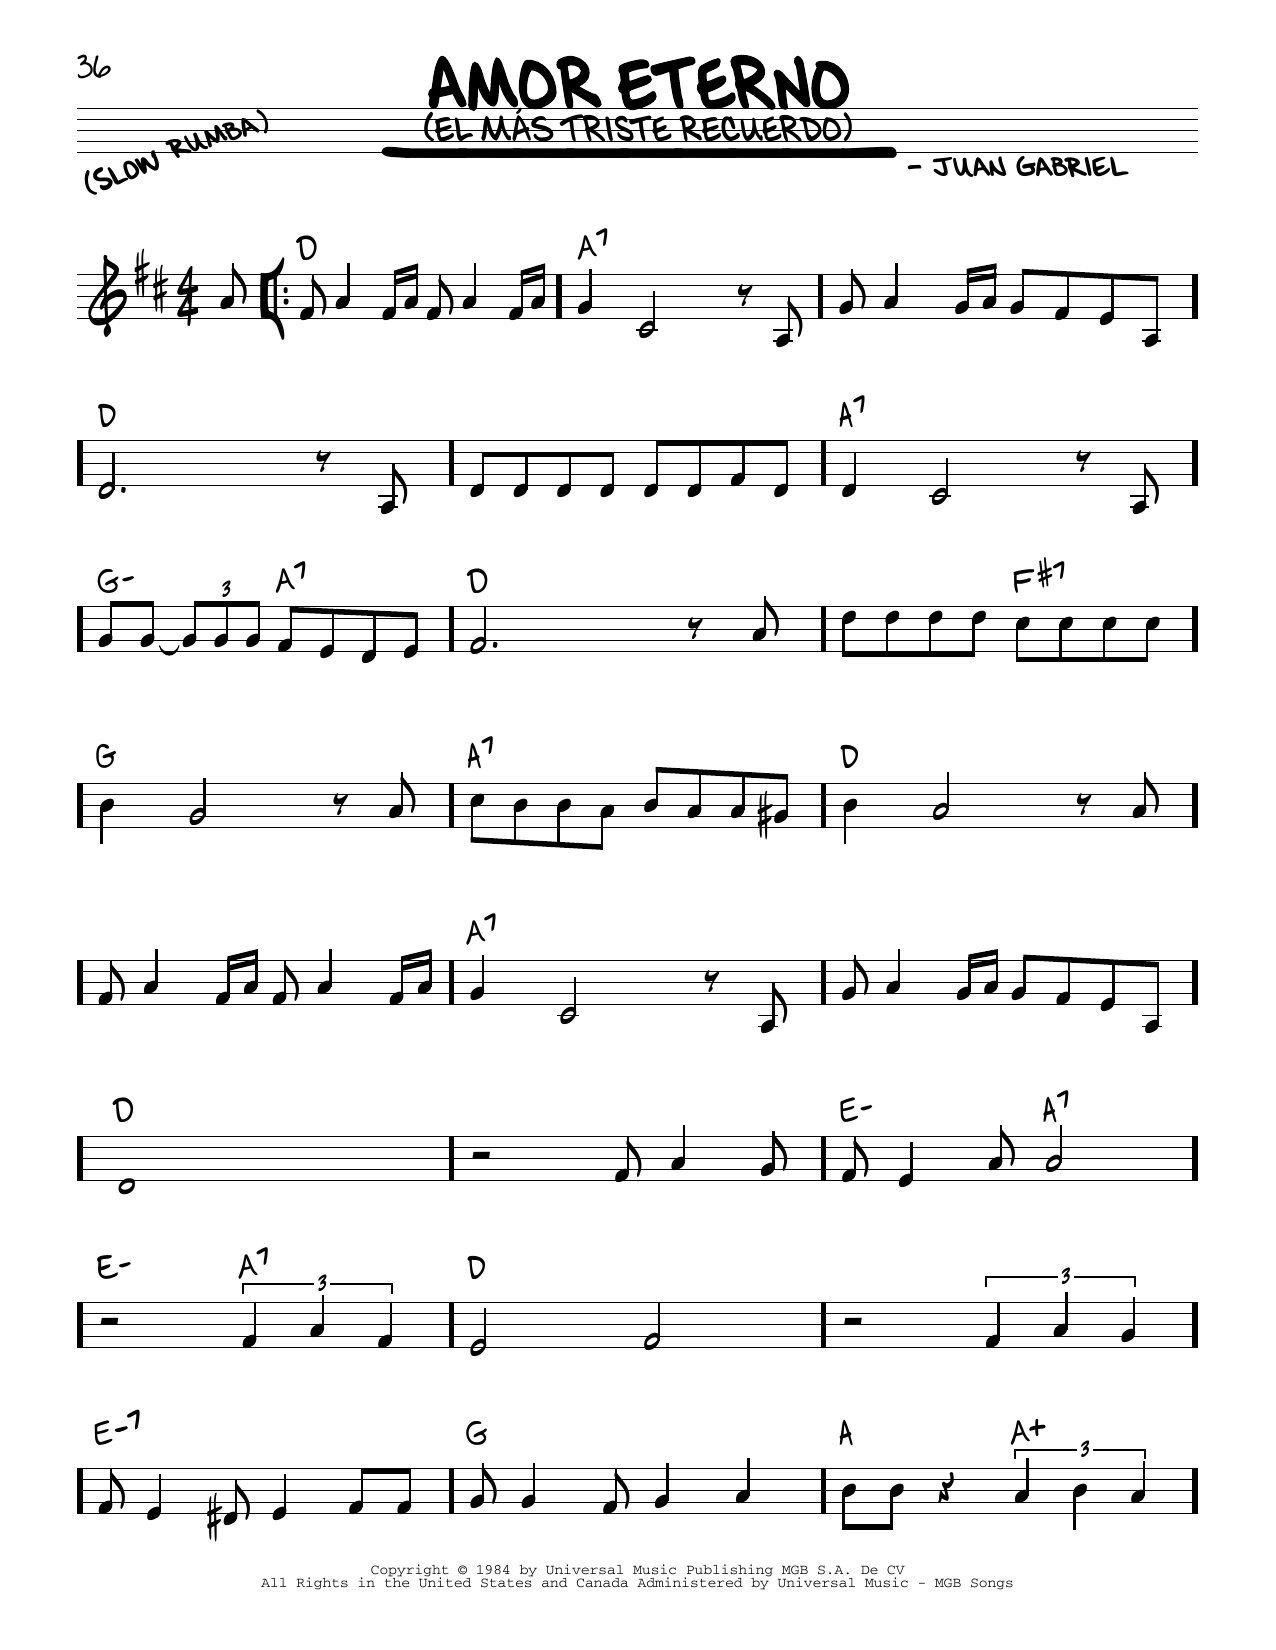 Juan Gabriel Amor Eterno (El Mas Triste Recuerdo) Sheet Music Notes & Chords for Real Book – Melody & Chords - Download or Print PDF